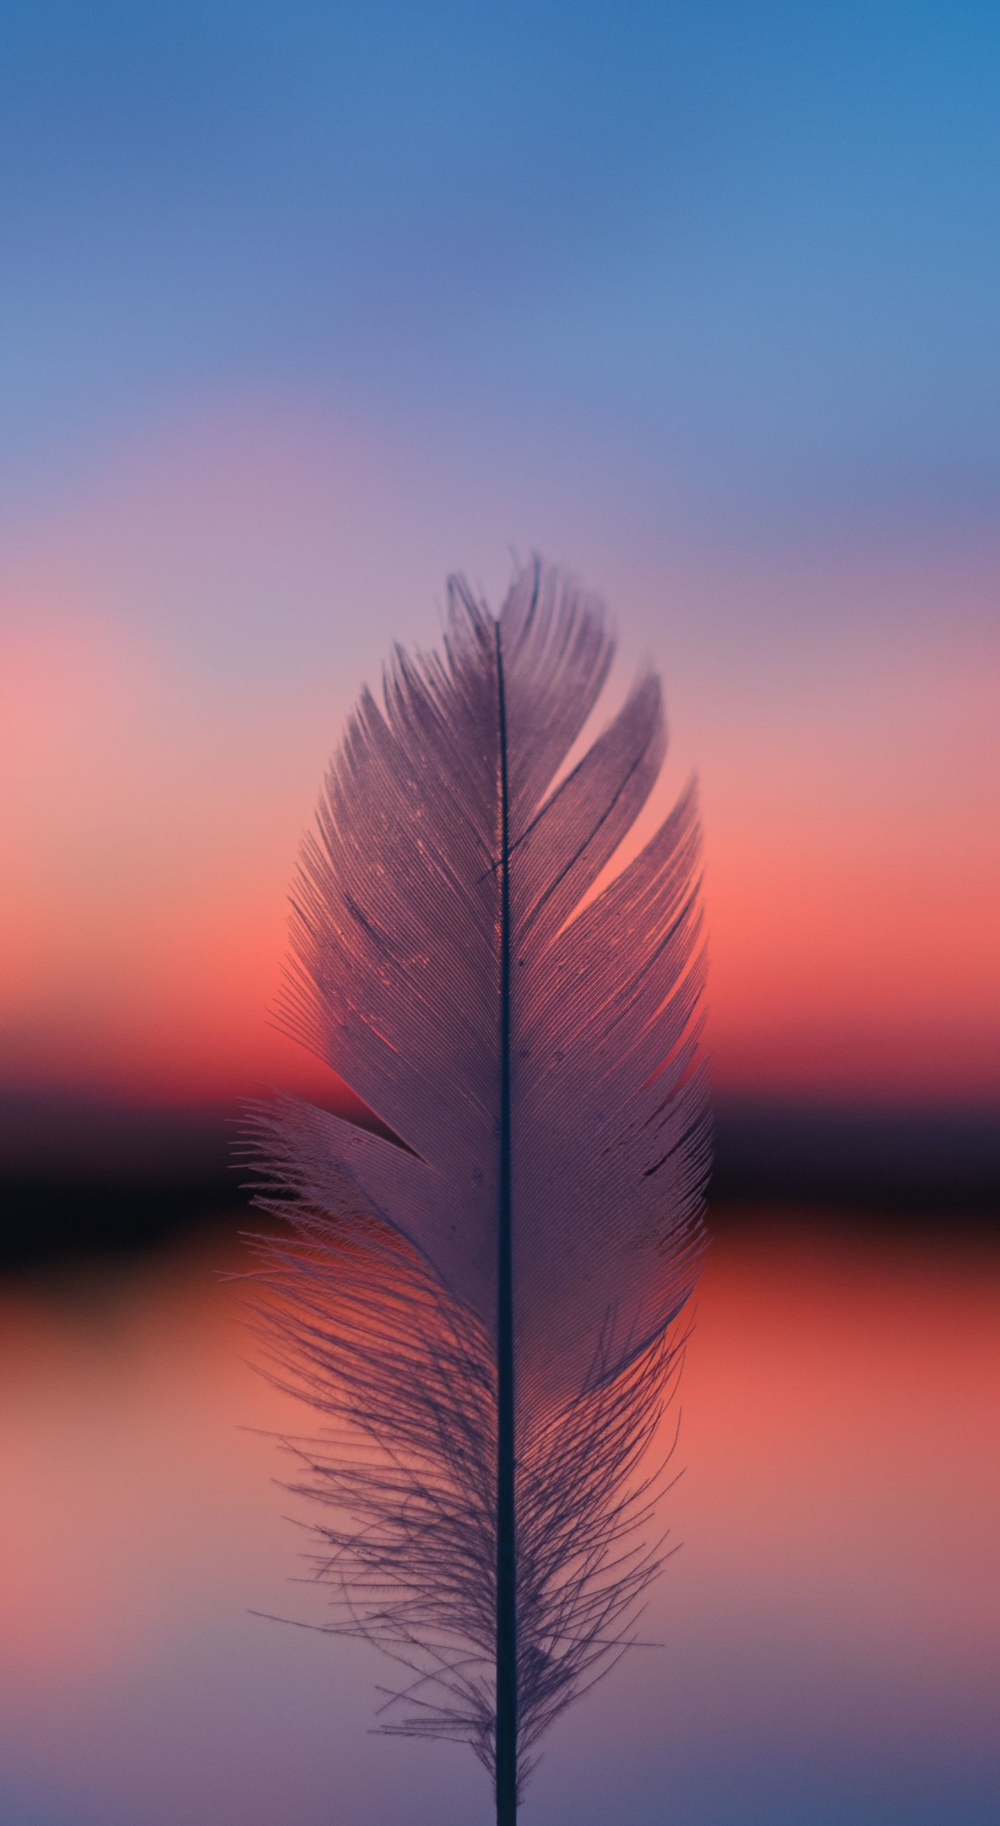 Feather, focus, blur, sunset .com